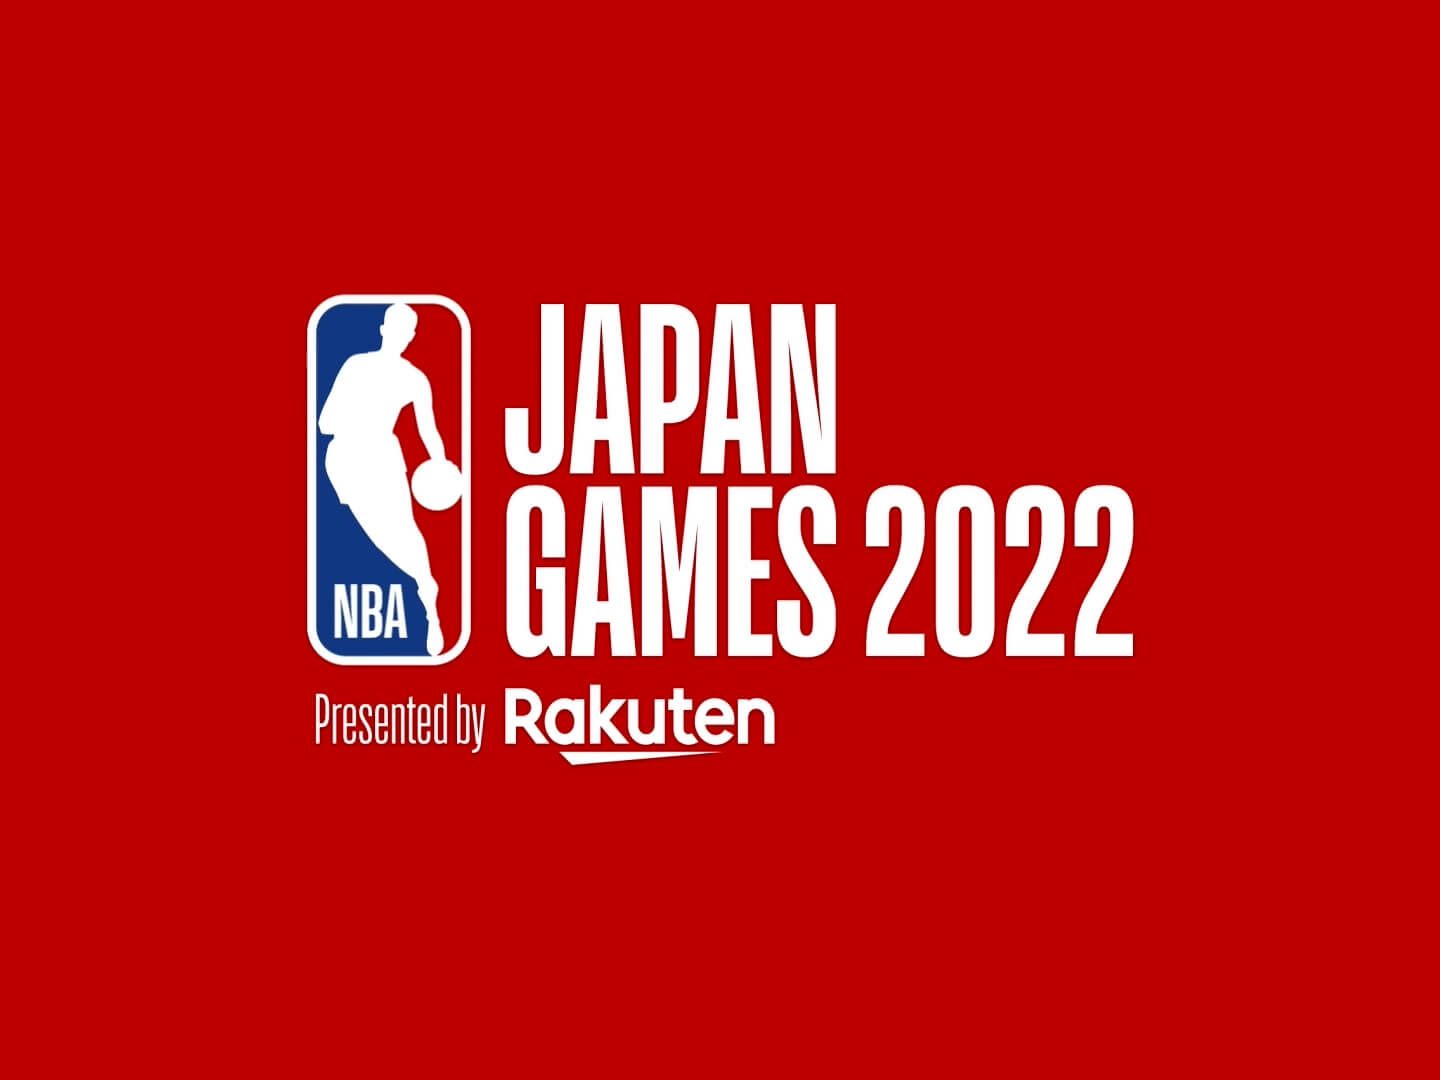 NBA JAPAN GAMES 2022」が2022年9月30日と10月2日に開催。ウォリアーズ 